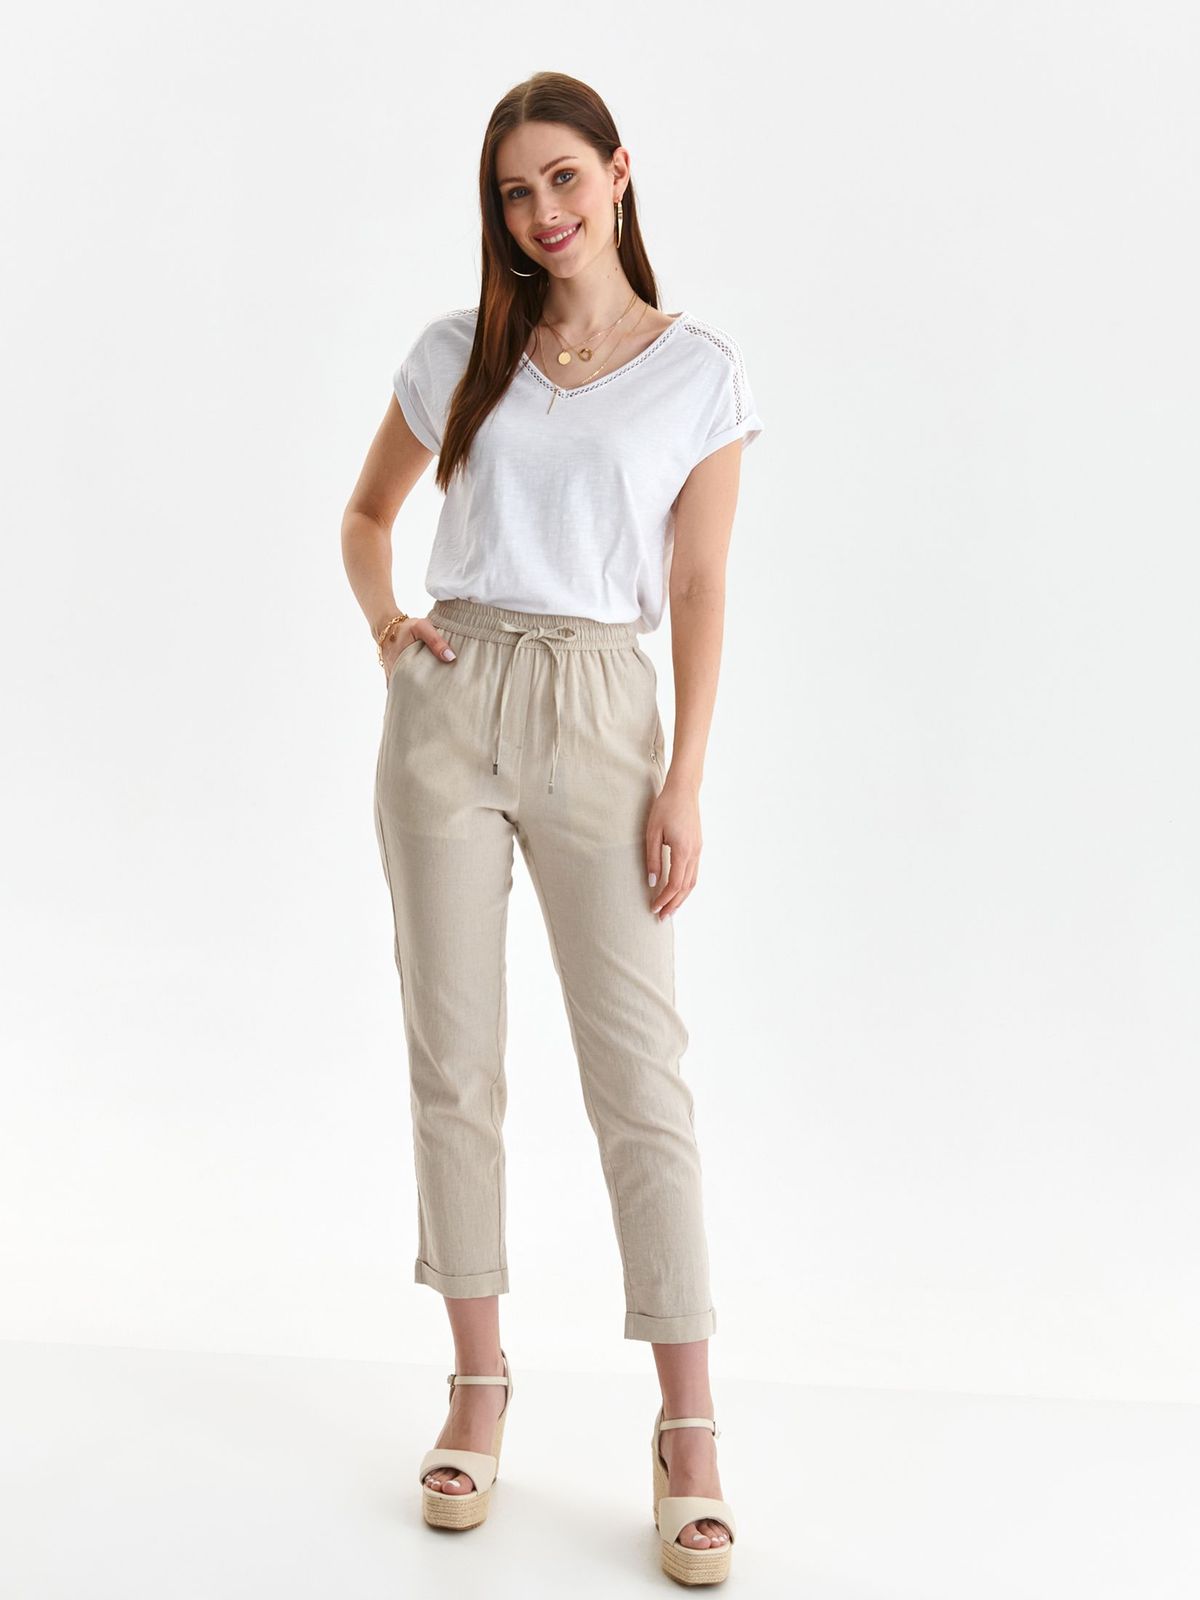 Cream trousers linen long conical medium waist lateral pockets